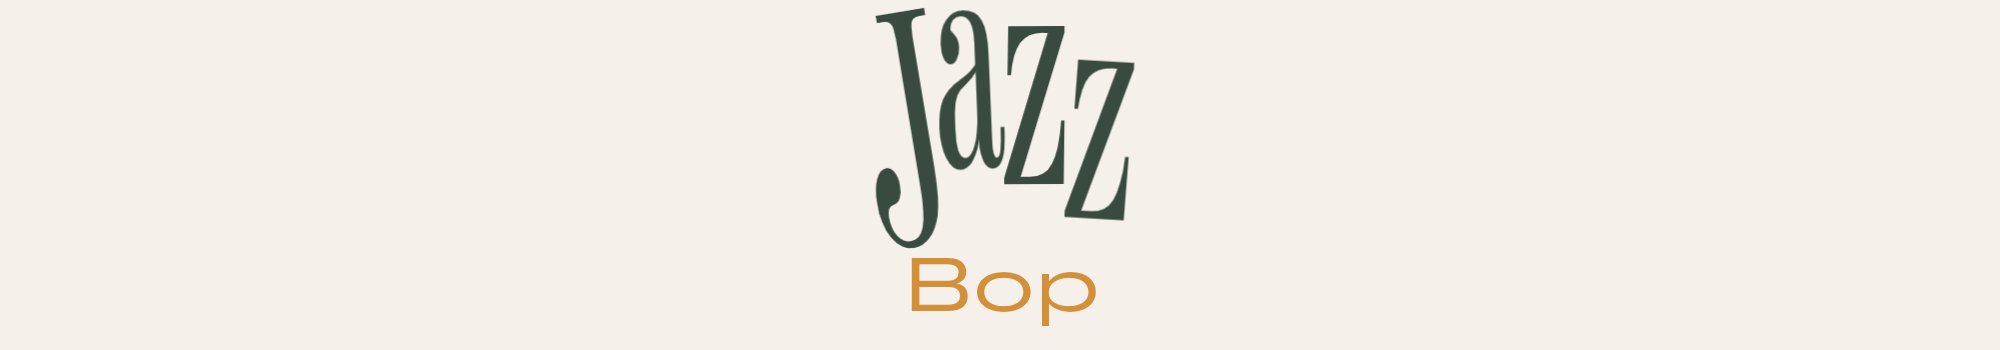 Rubrik till kategori: Jazz - Bop